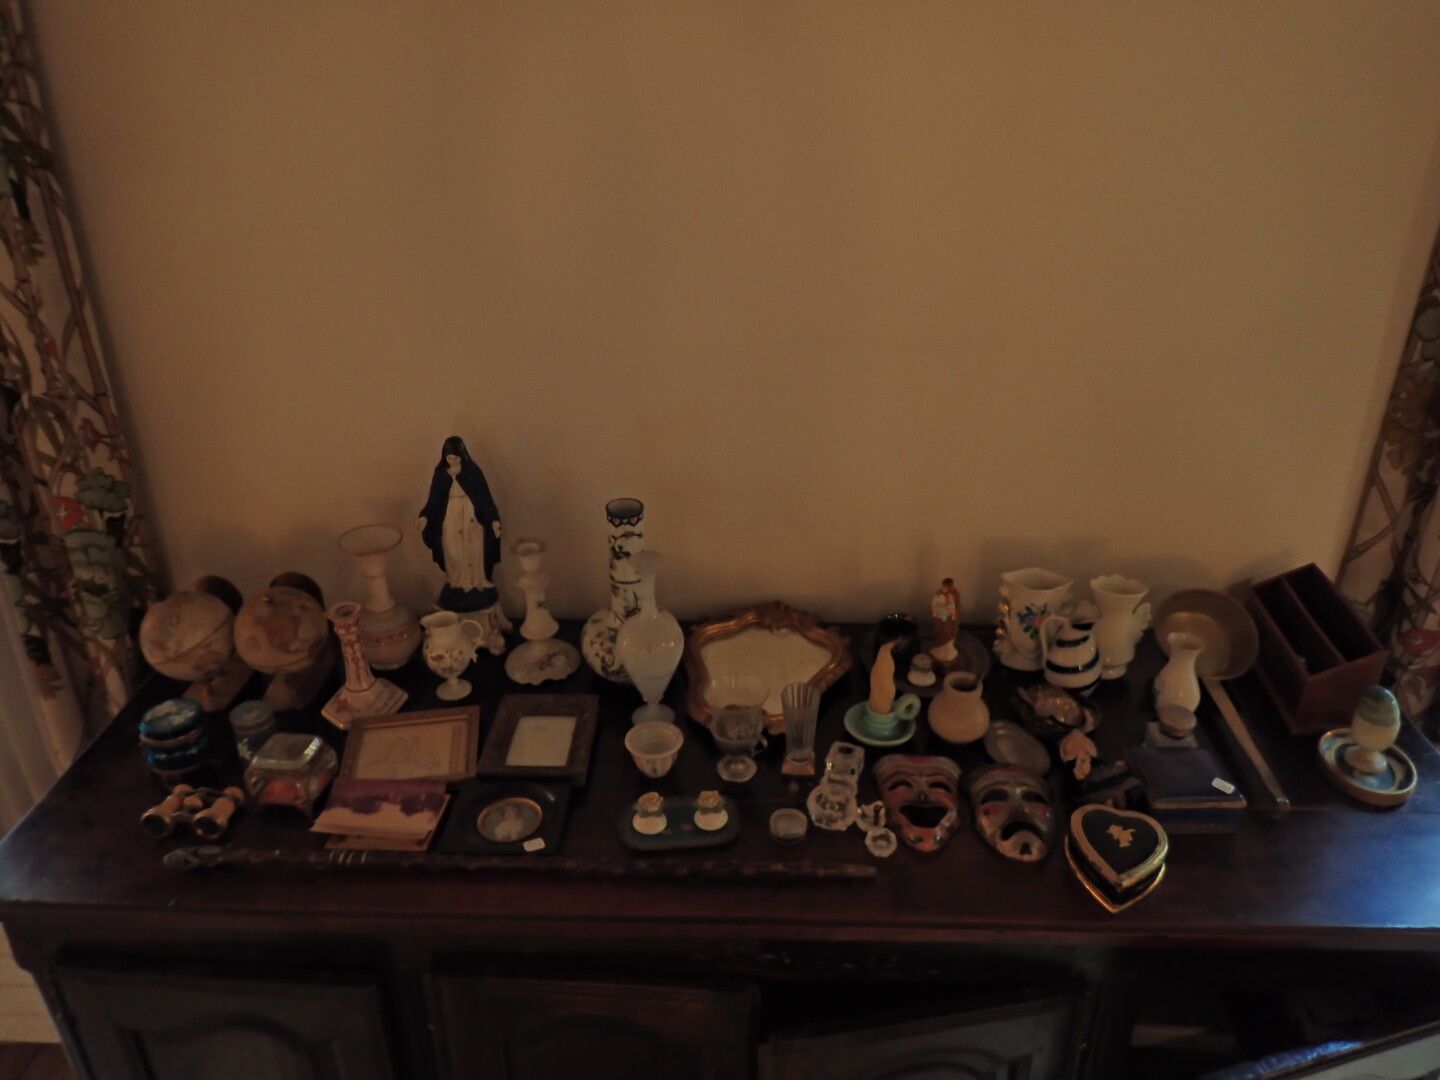 Null 各种小饰品如盒子、珐琅、威尼斯人面具、瓷器处女、一对小球、小镜子、盒子及杂物。